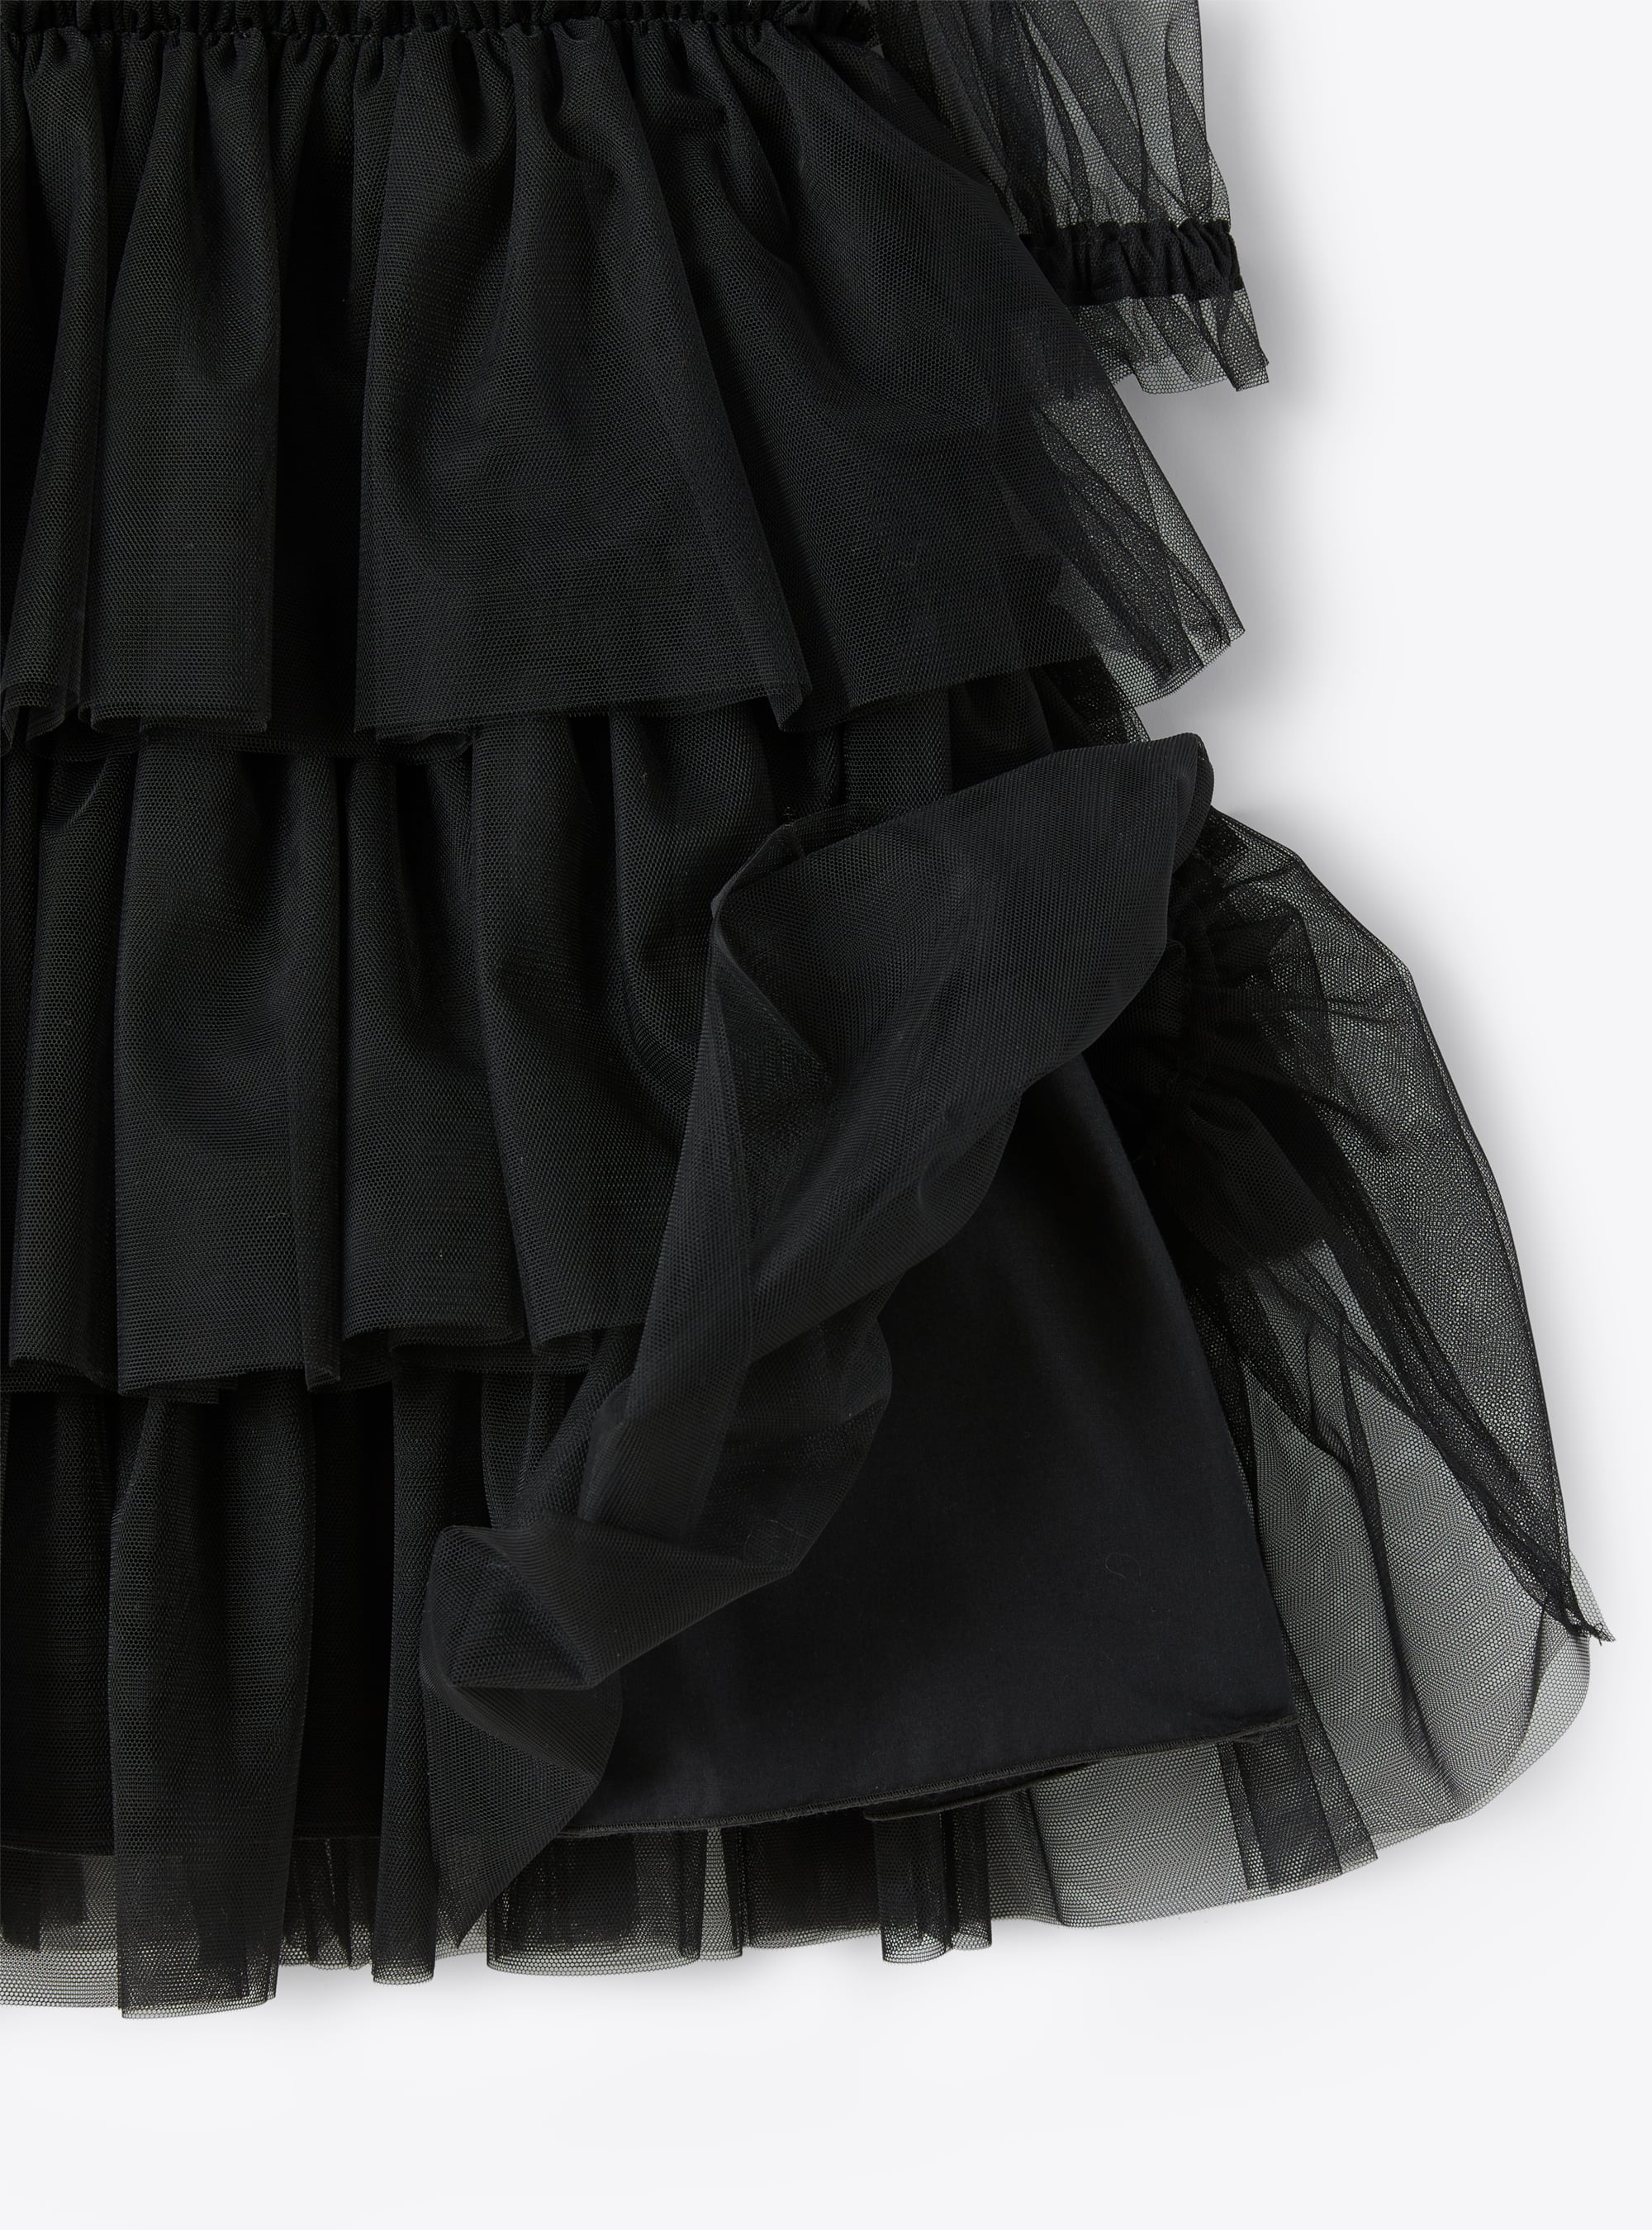 Tiered dress in black tulle - Black | Il Gufo